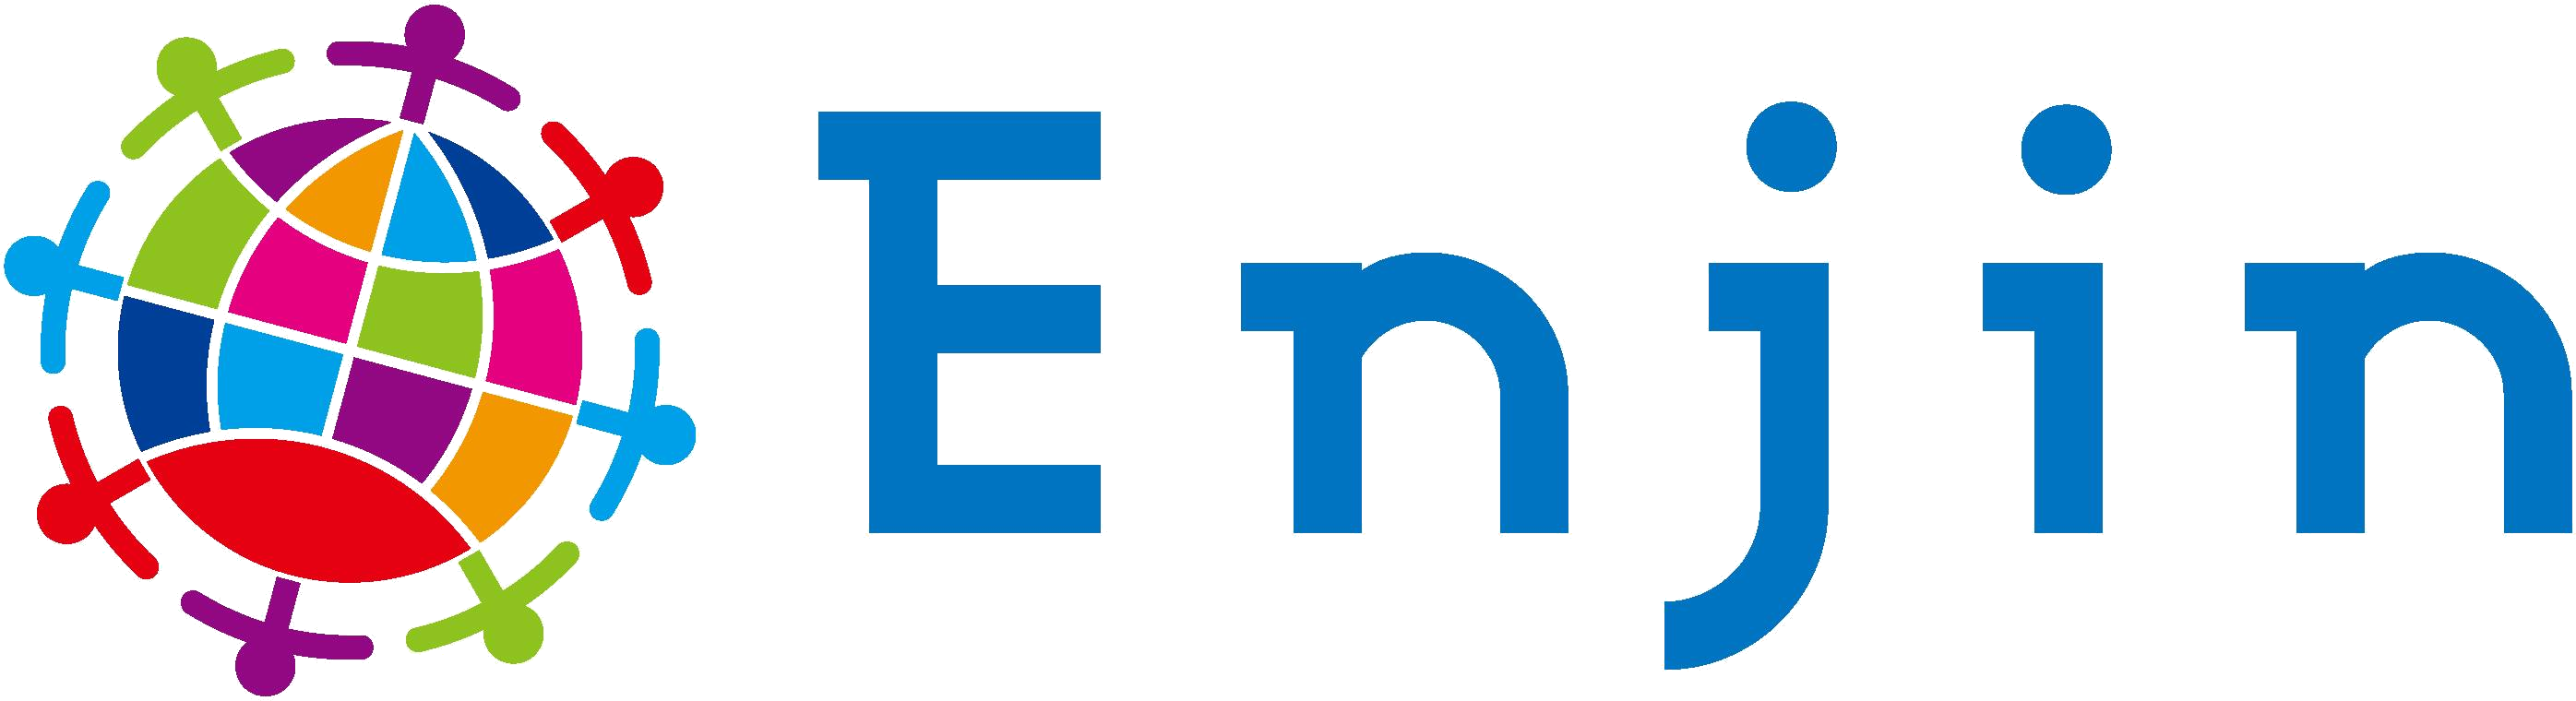 Enjin株式会社 会社概要 – Enjin Inc. –